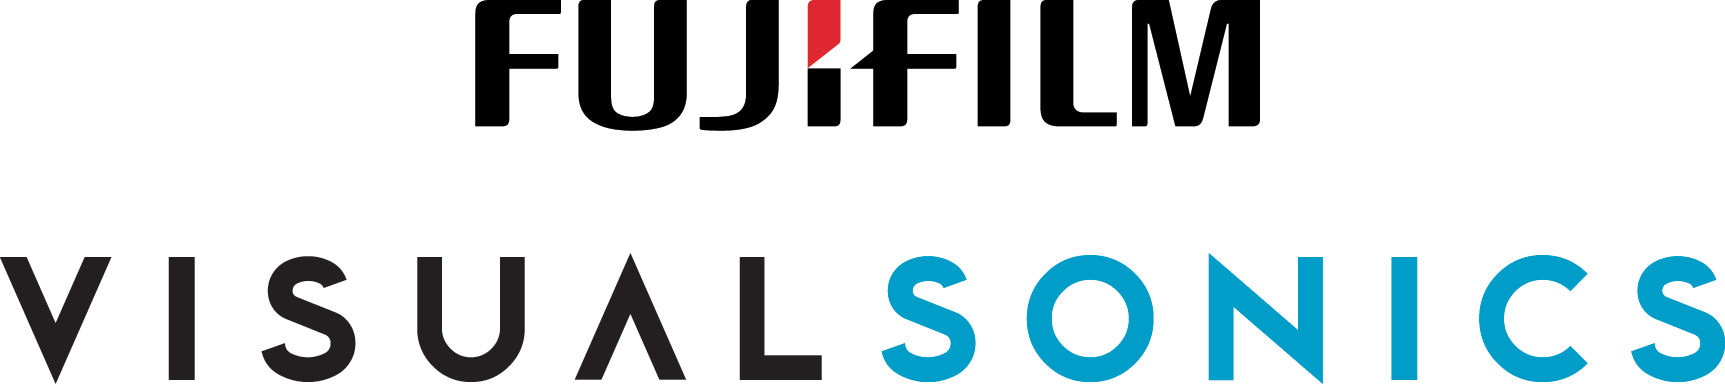 FUJIFILM VisualSonics -Logo-Conference.png